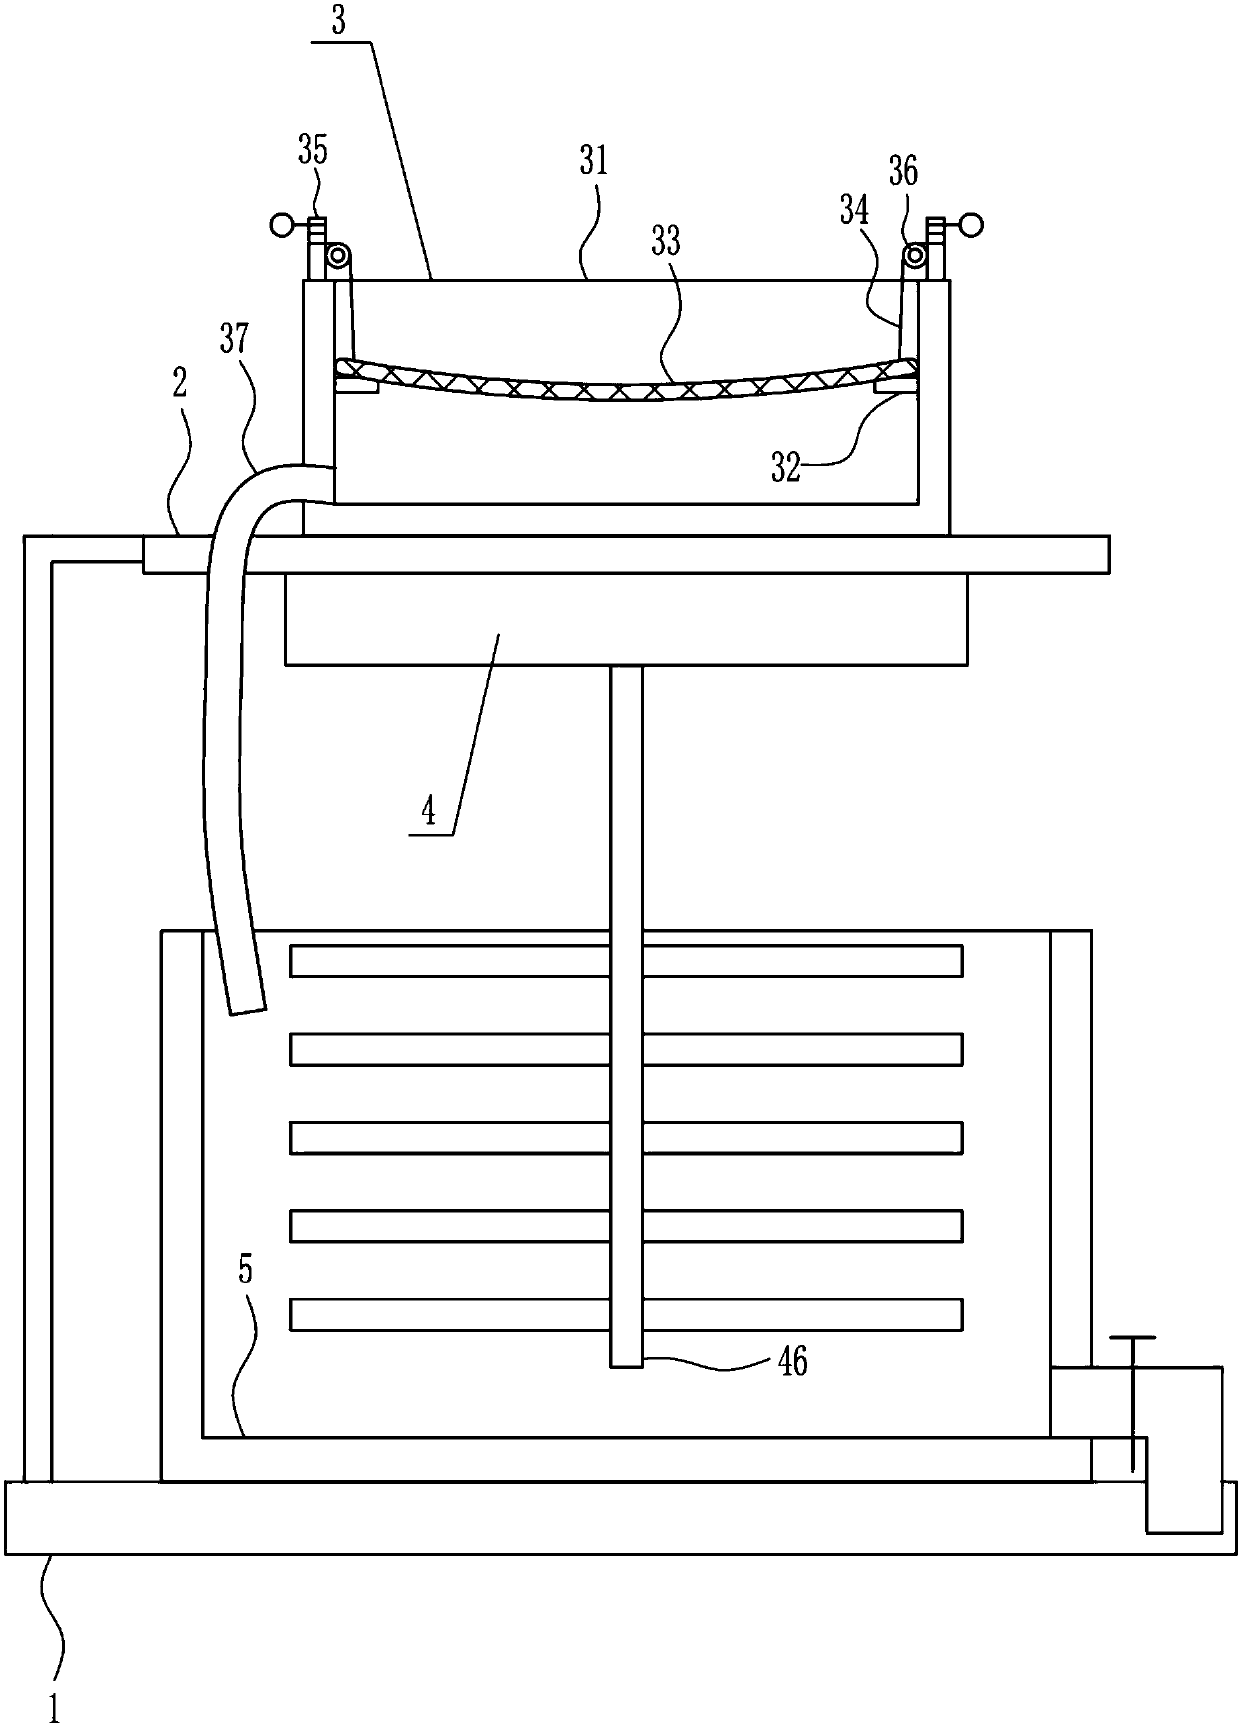 Multi-grade purification treatment device for sewage treatment